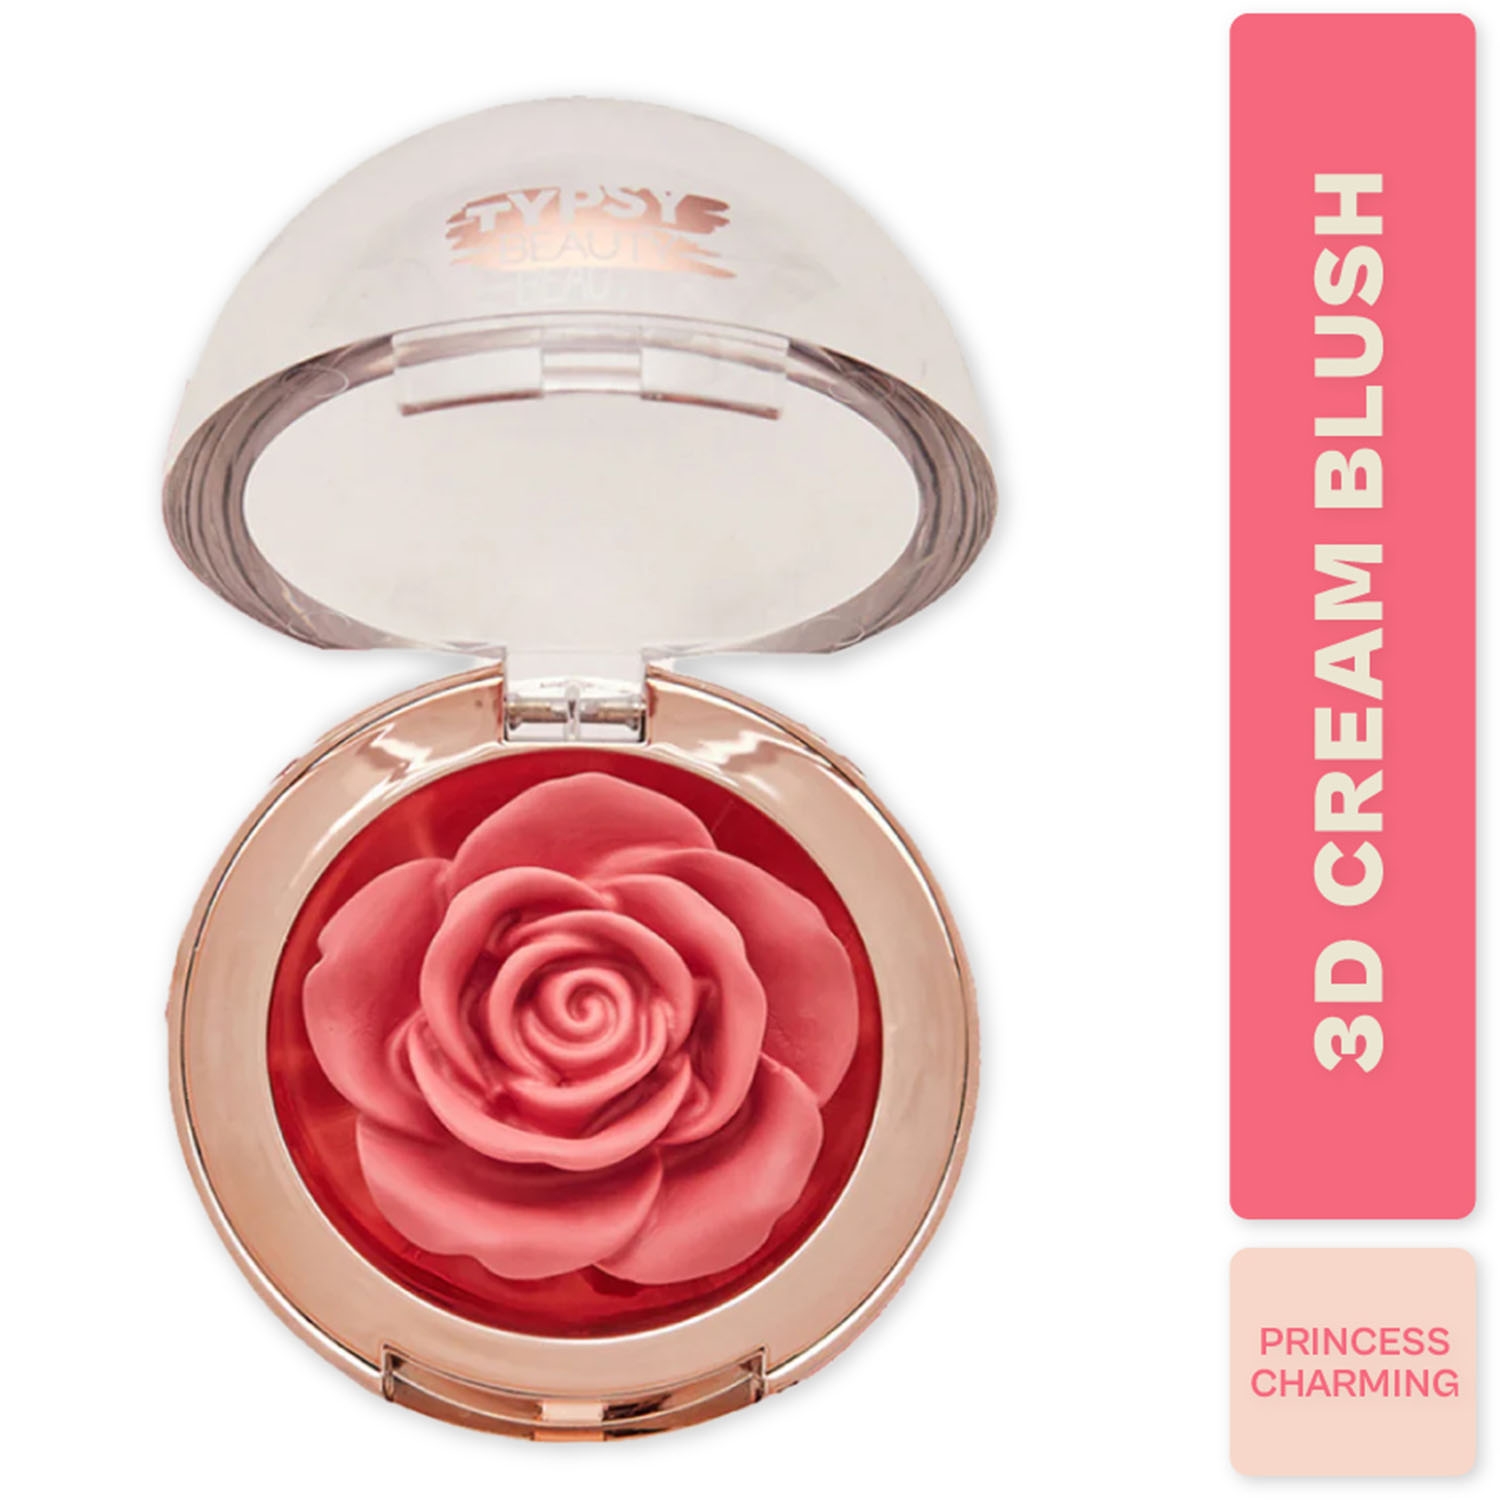 Typsy Beauty | Typsy Beauty Enchanted Garden 3D Rose Blush - Princess Charming (4.8g)